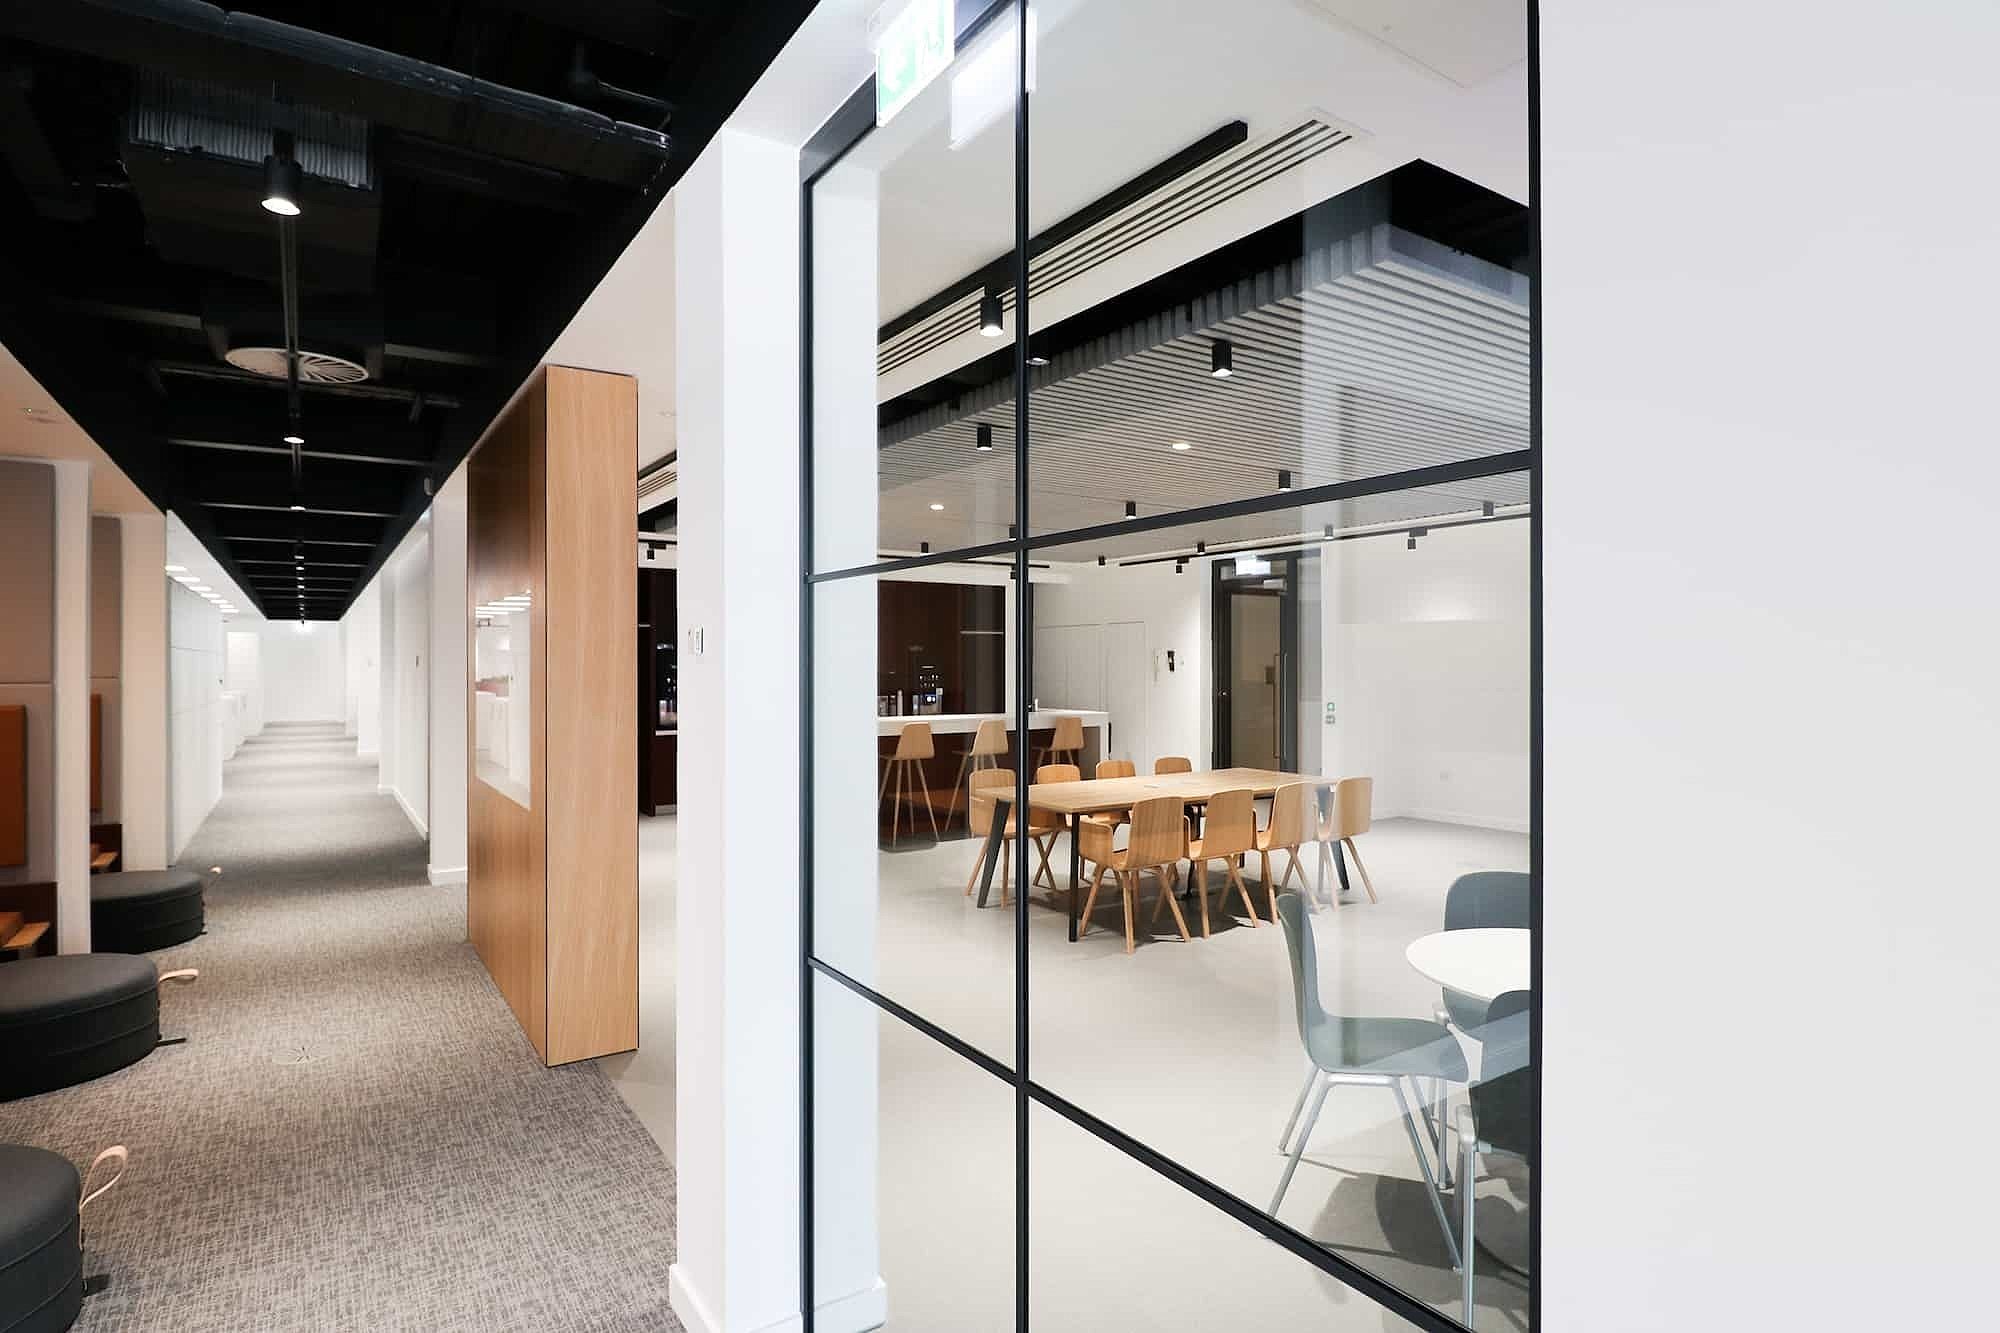 Corridor in modern office refurbishment